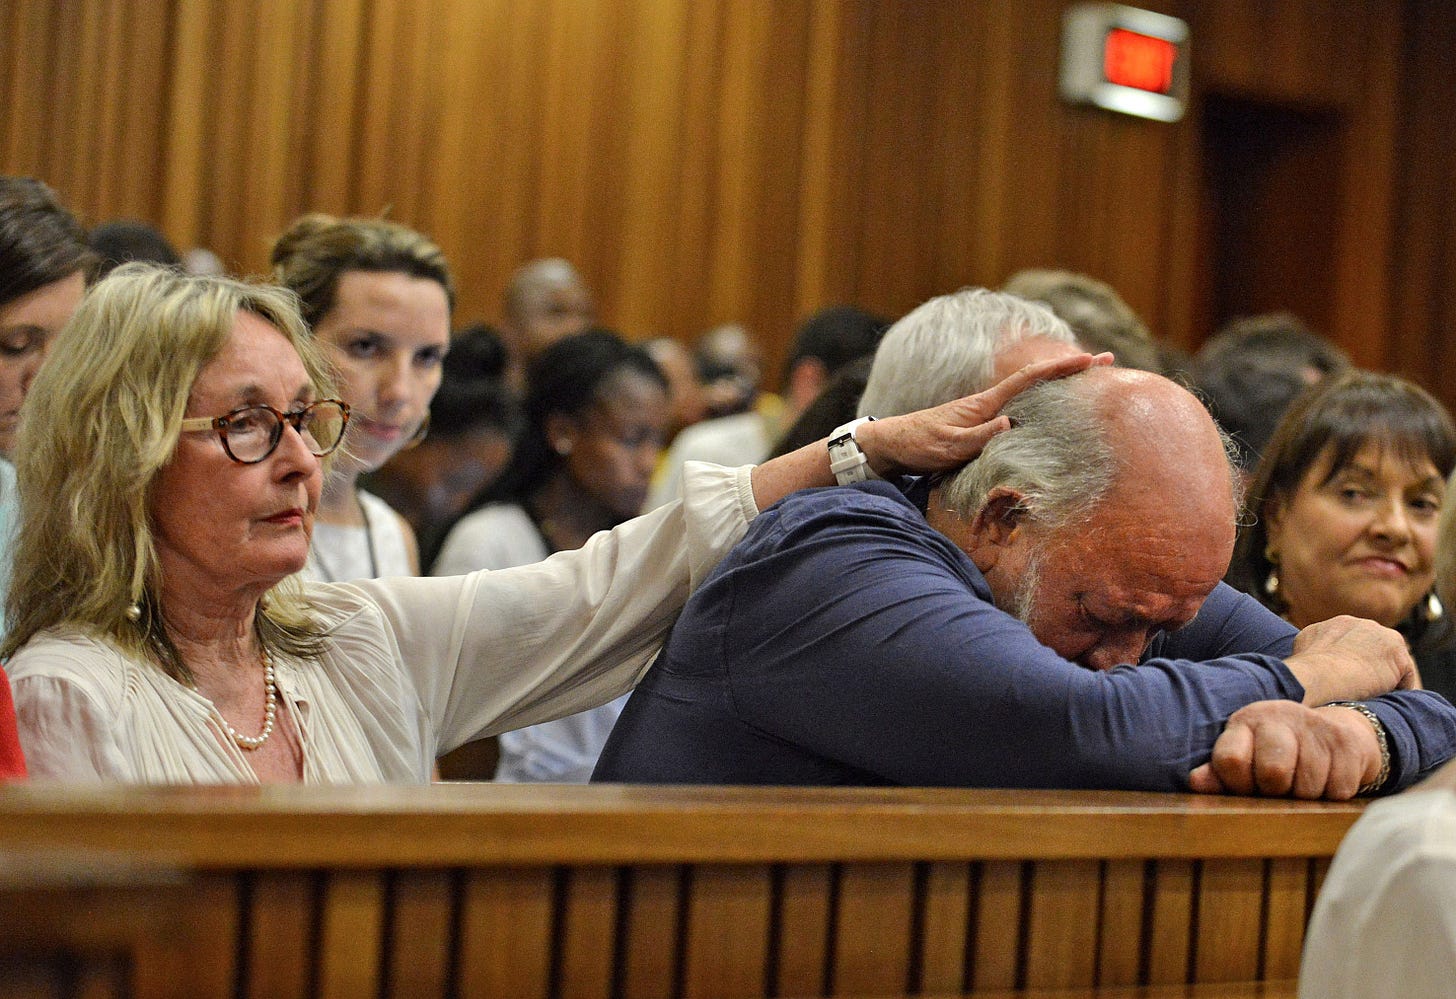 Reeva Steenkamp's mother consoles her husband during the Oscar Pistorius trial